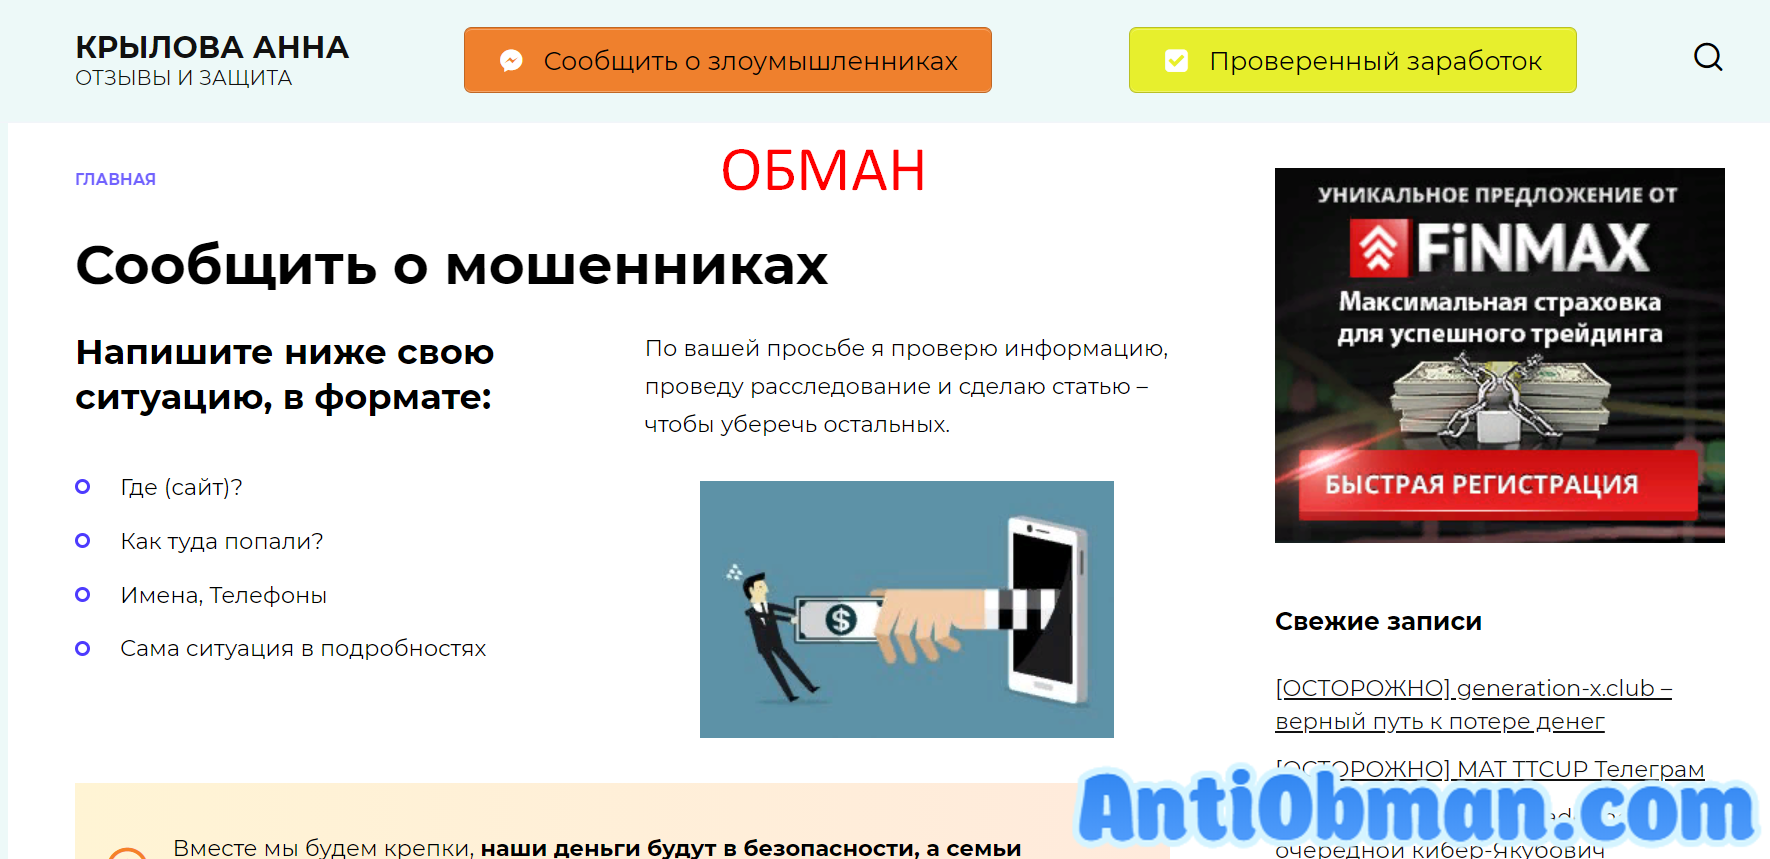 Anna-otzyvy.ru - отзывы о сайте Крыловой Анны